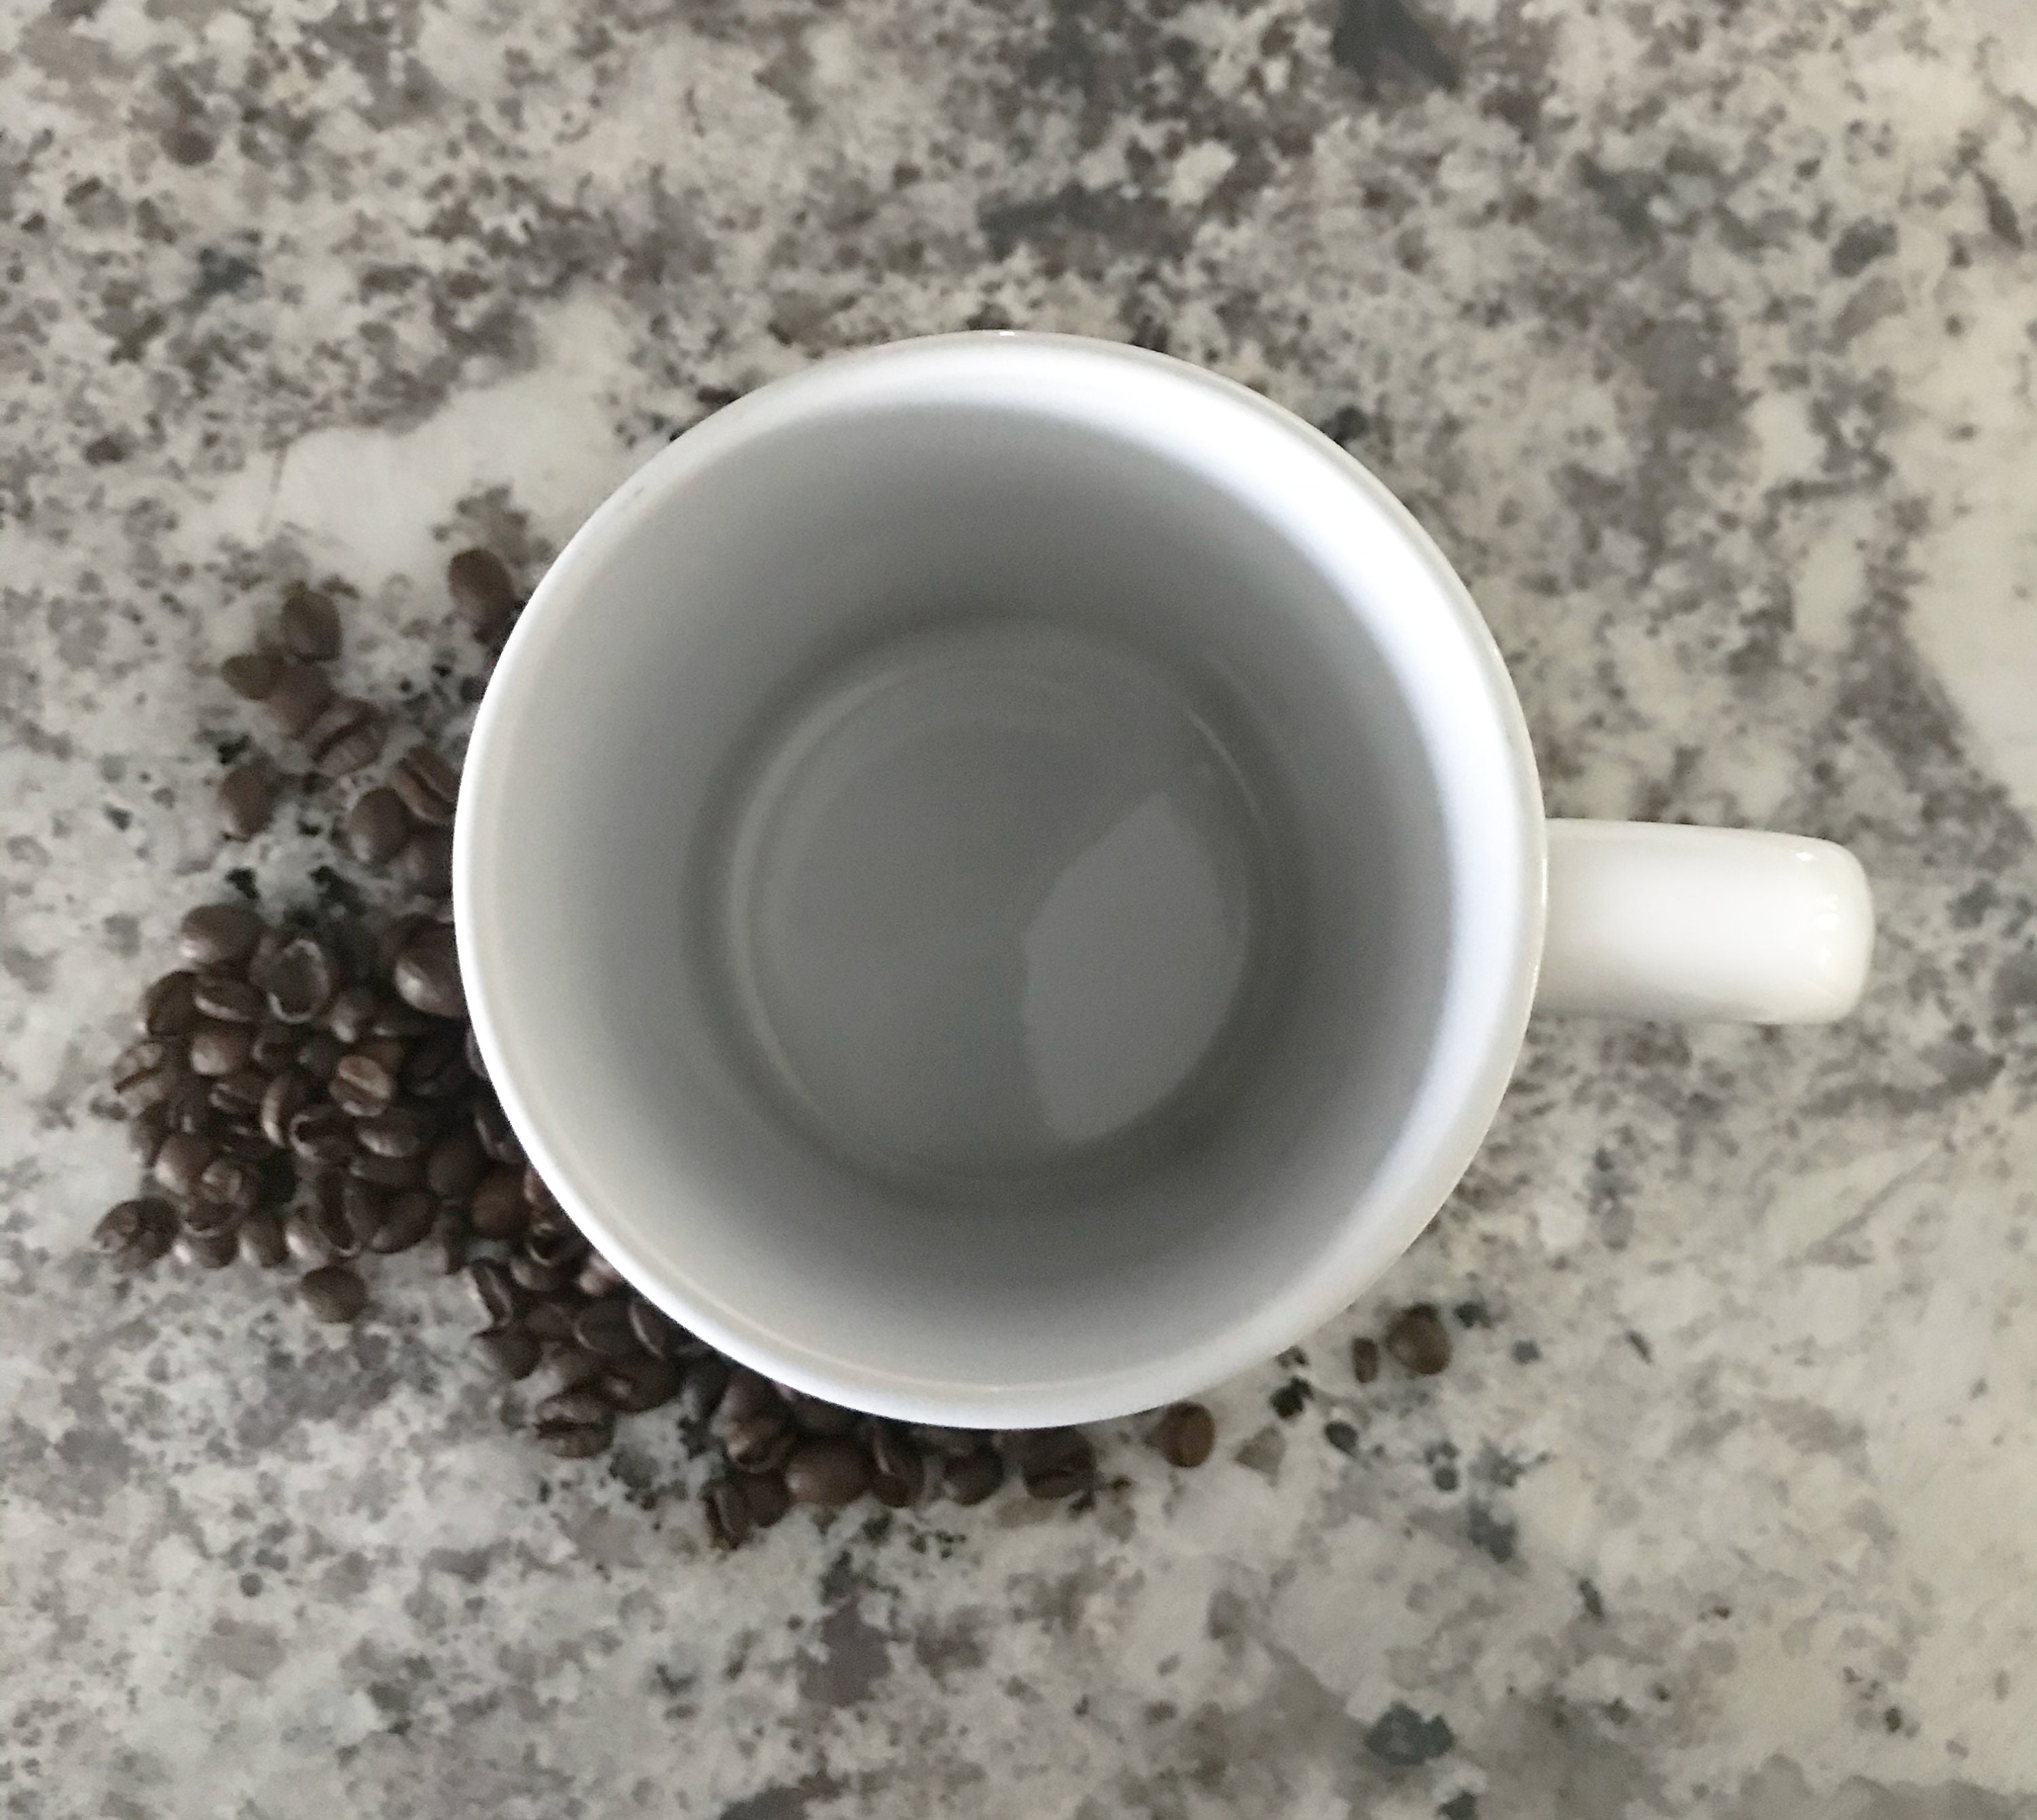 LEAF TOSS COFFEE CUP - 815952222536